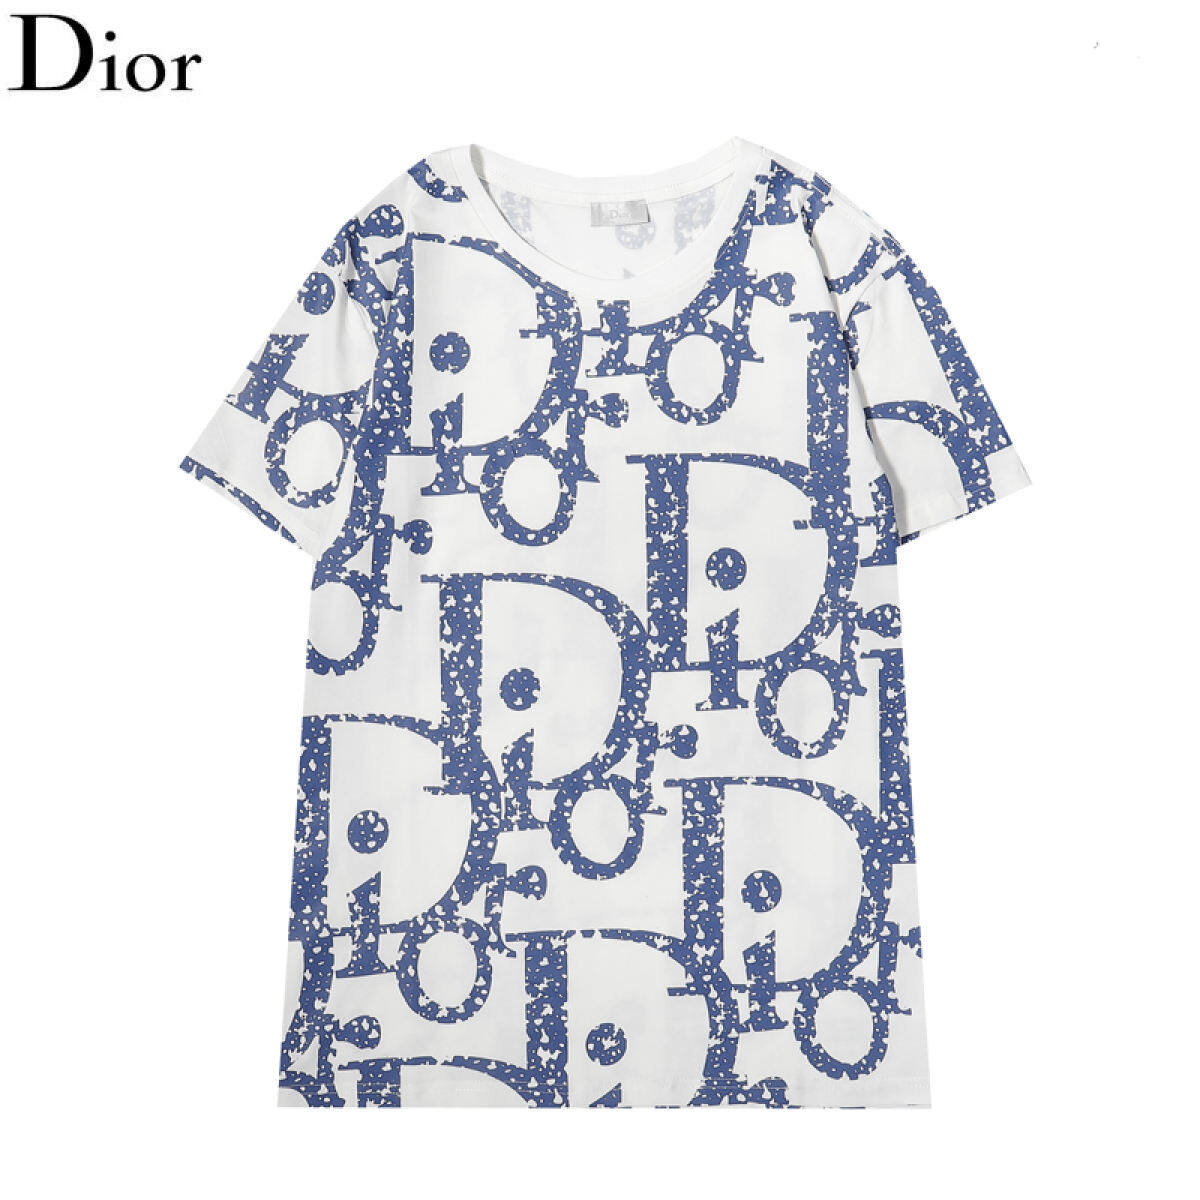 Dior Shirt